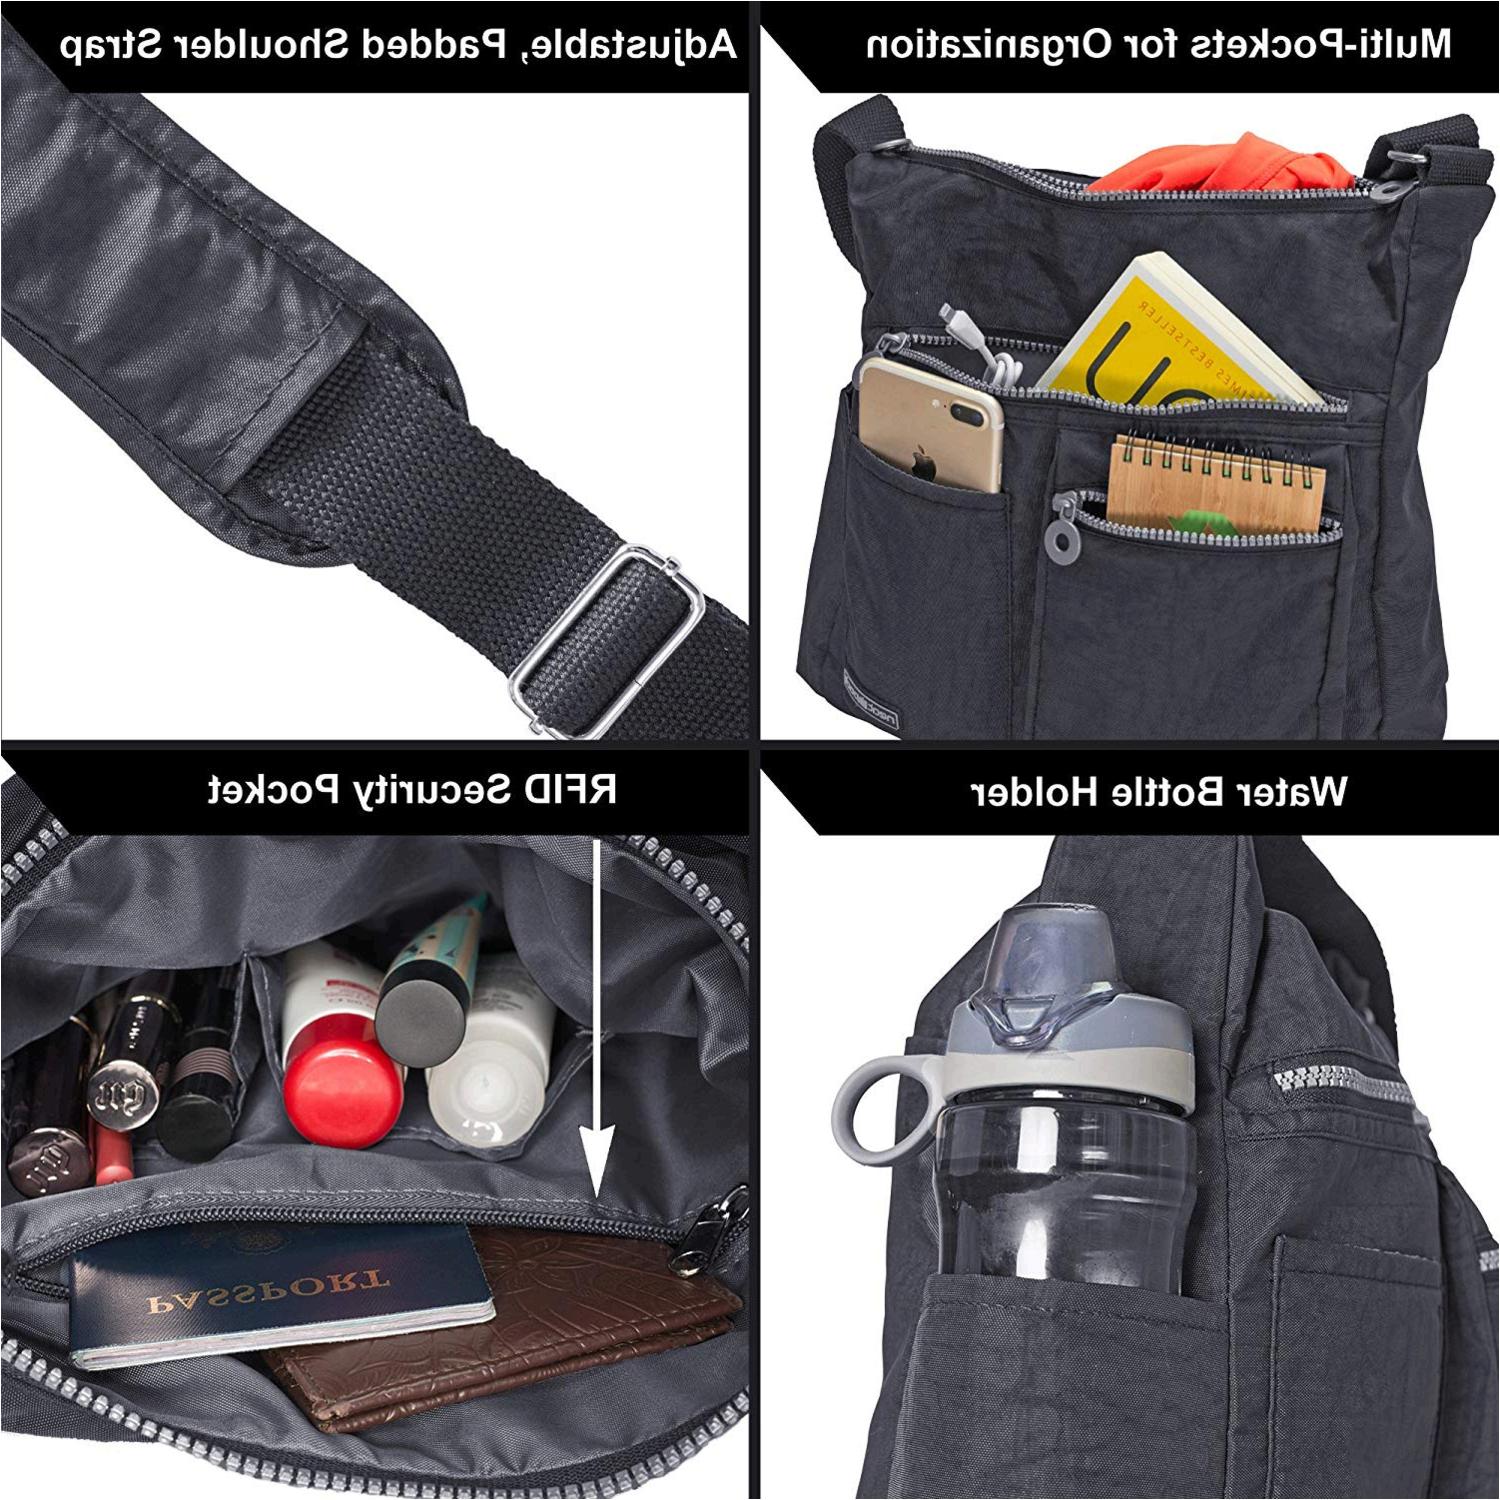 NeatPack Crossbody Bag for Women with Anti Theft RFID, Black, Size Medium OYvS | eBay